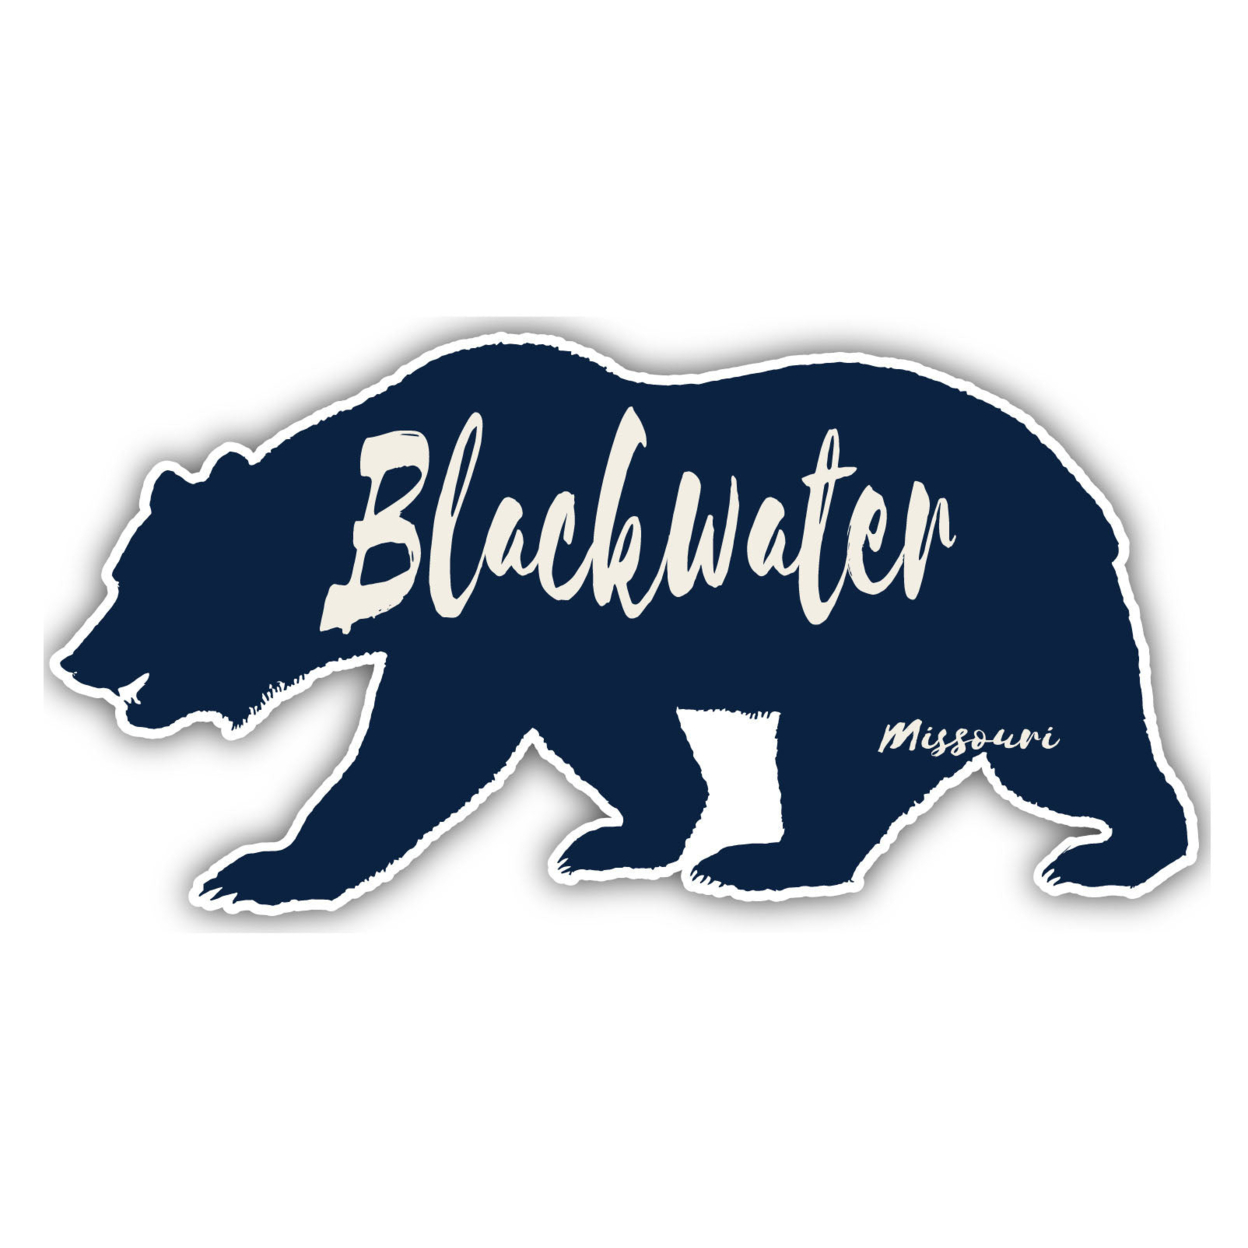 Blackwater Missouri Souvenir Decorative Stickers (Choose Theme And Size) - 4-Pack, 6-Inch, Bear